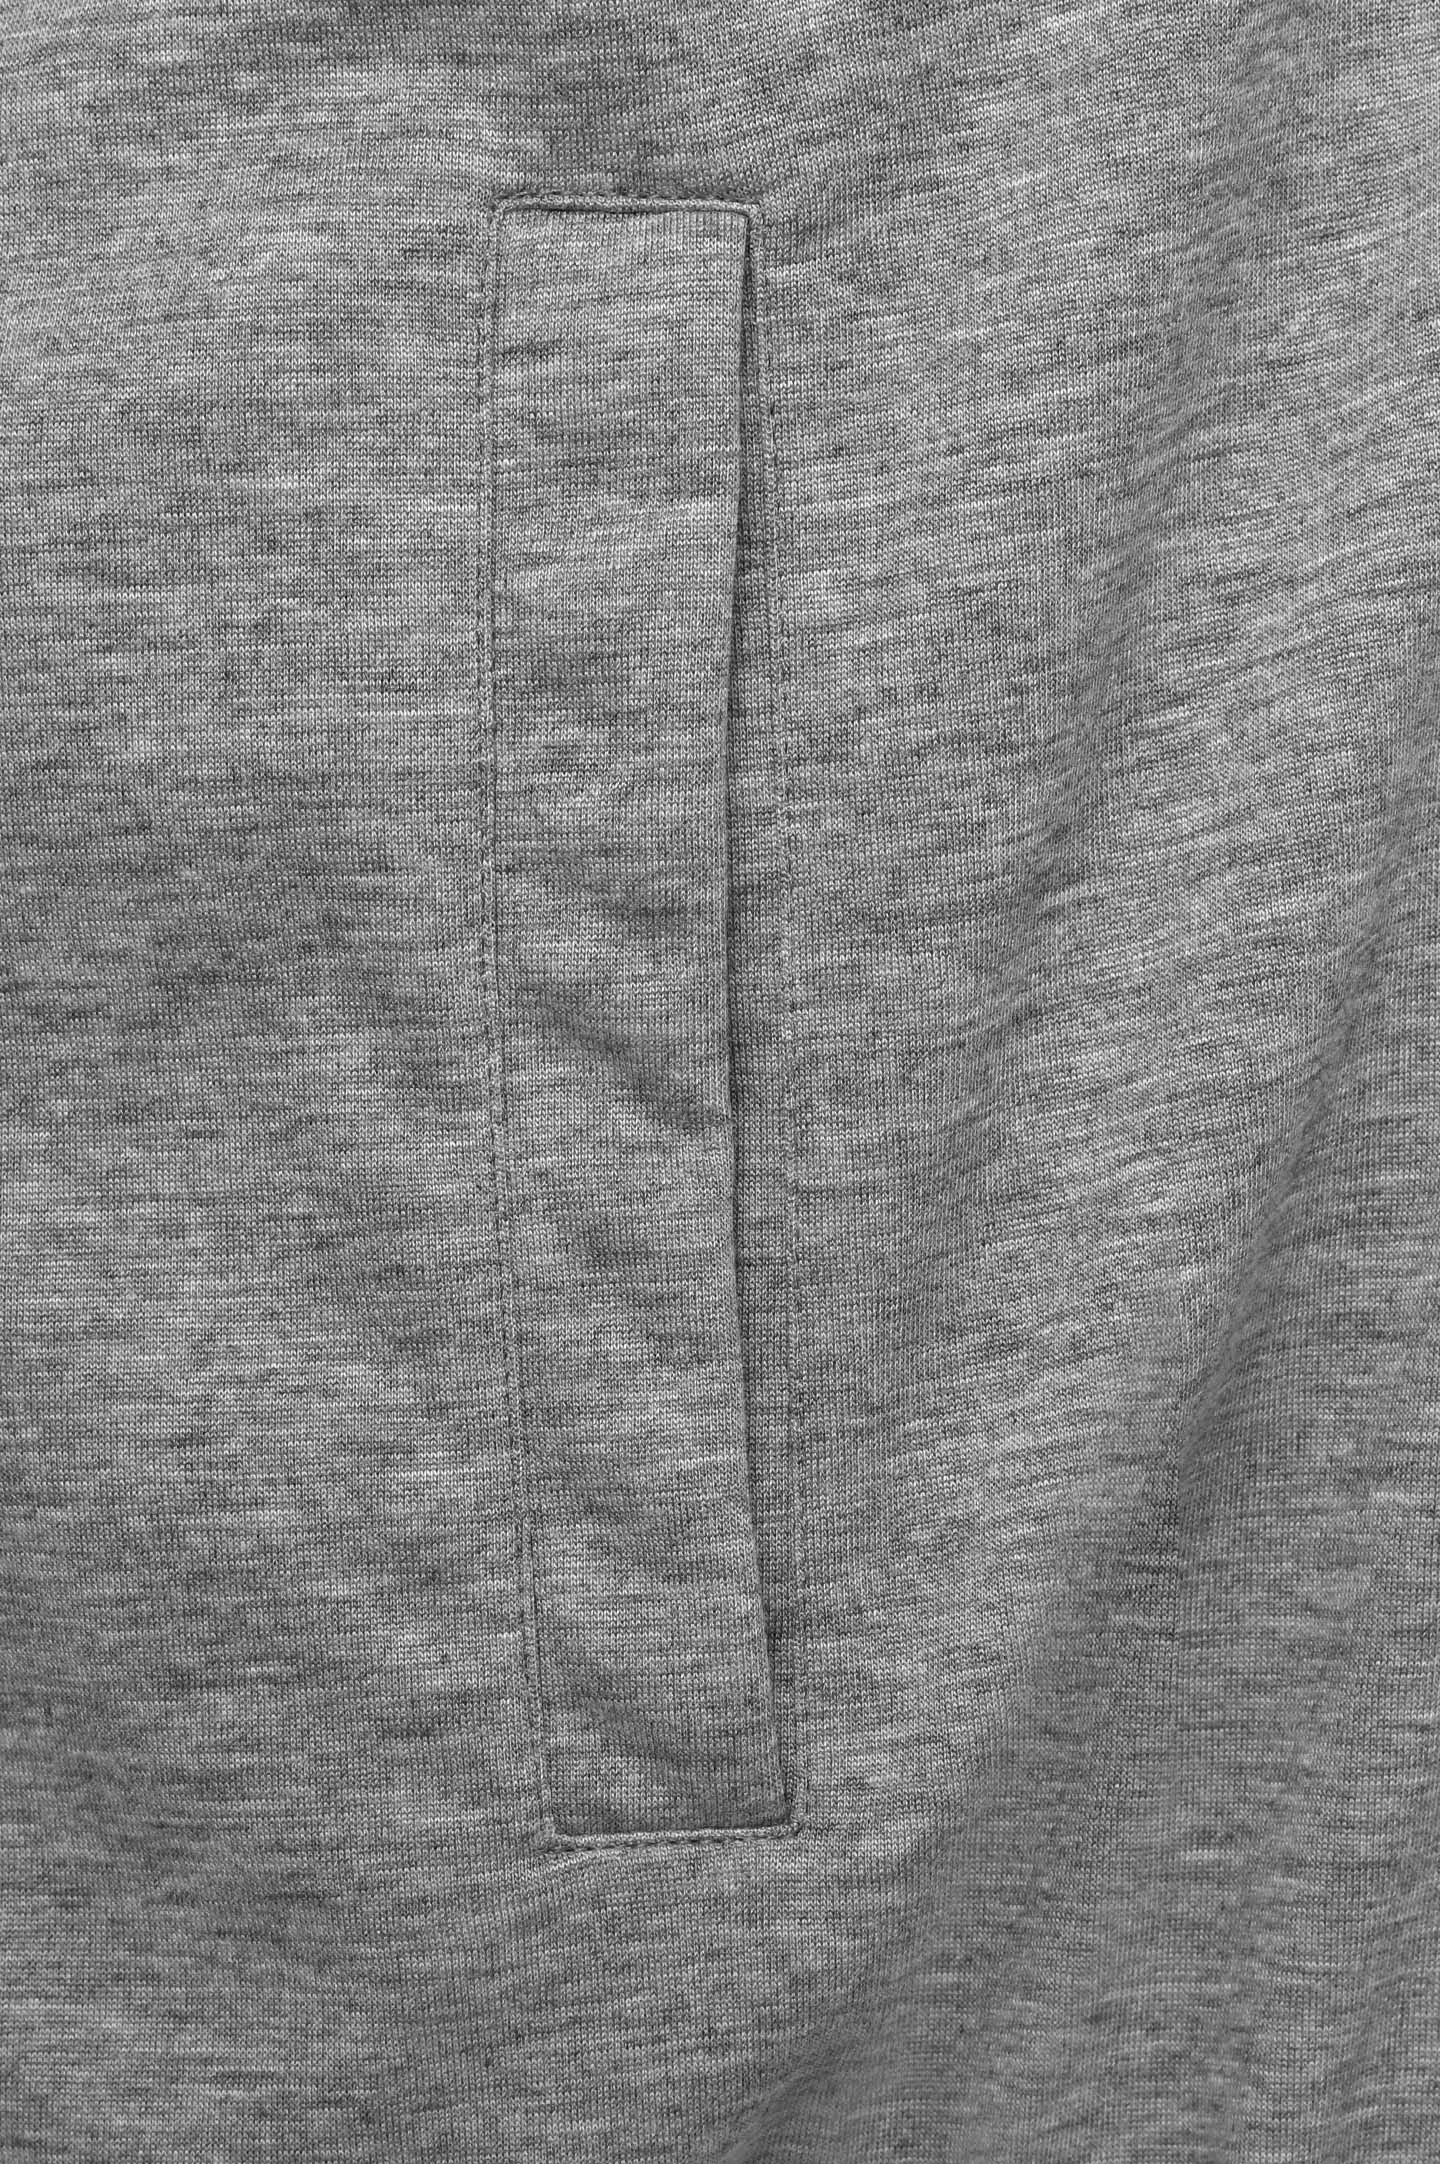 Куртка KITON UW1181V0830A0, цвет: Серый, Мужской